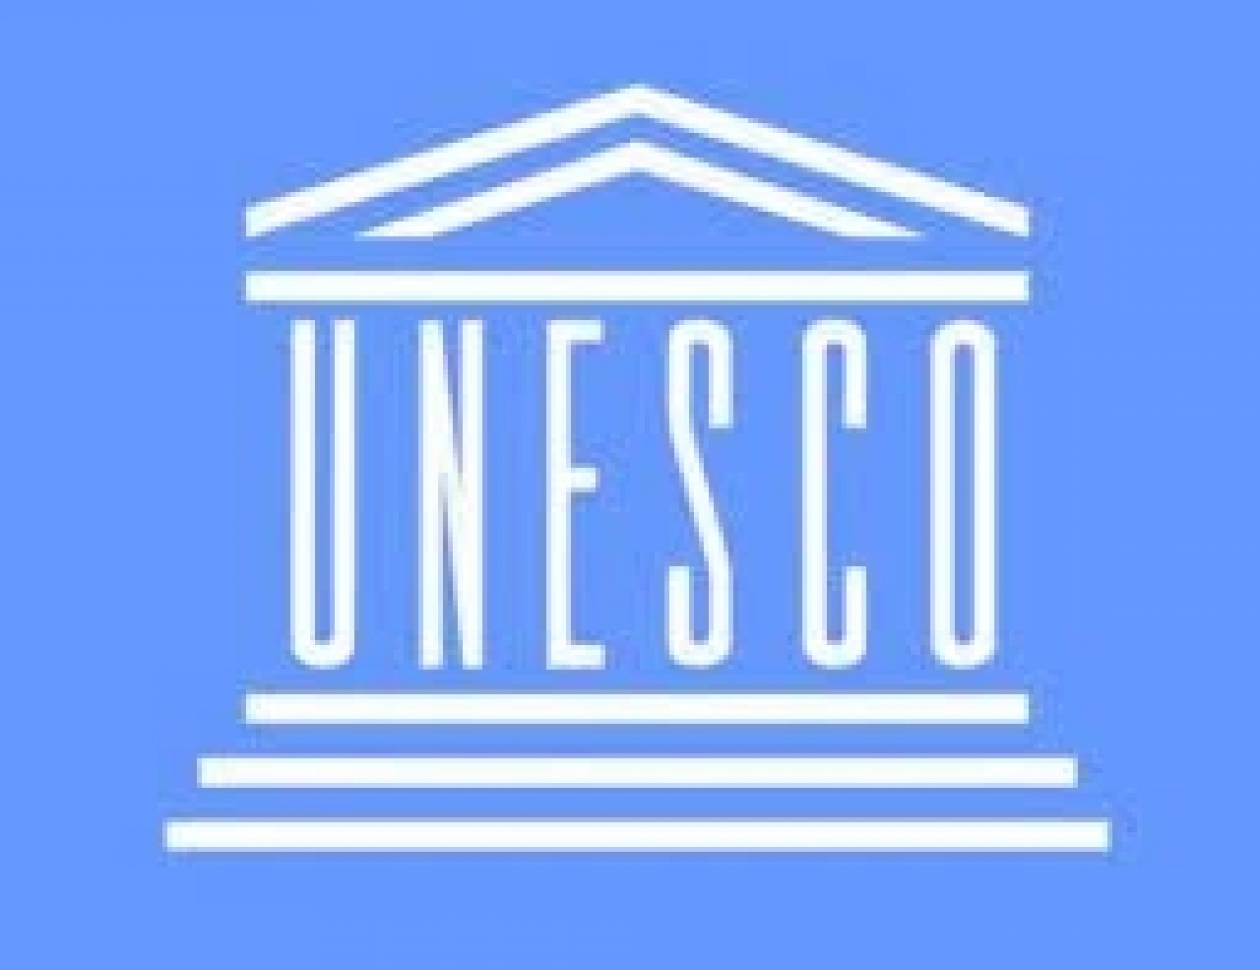 Unesco : Το Σπήλαιο Σοβέ εντάχθηκε στον Κατάλογο Μνημείων Παγκόσμιας Κληρονομιάς